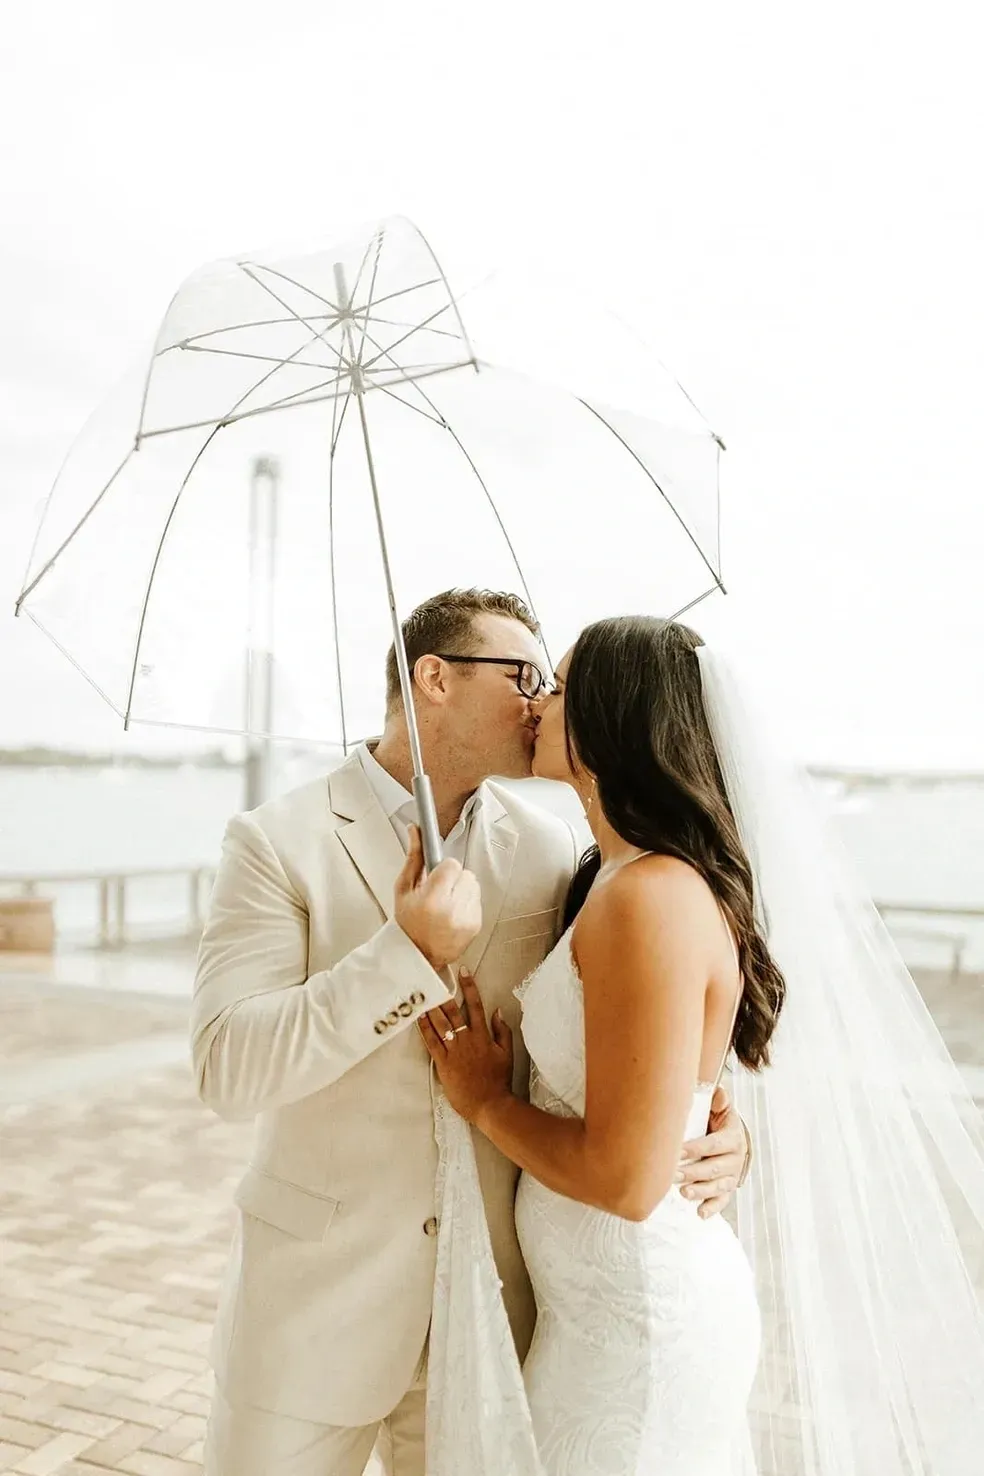 A man and woman kissing under an umbrella.